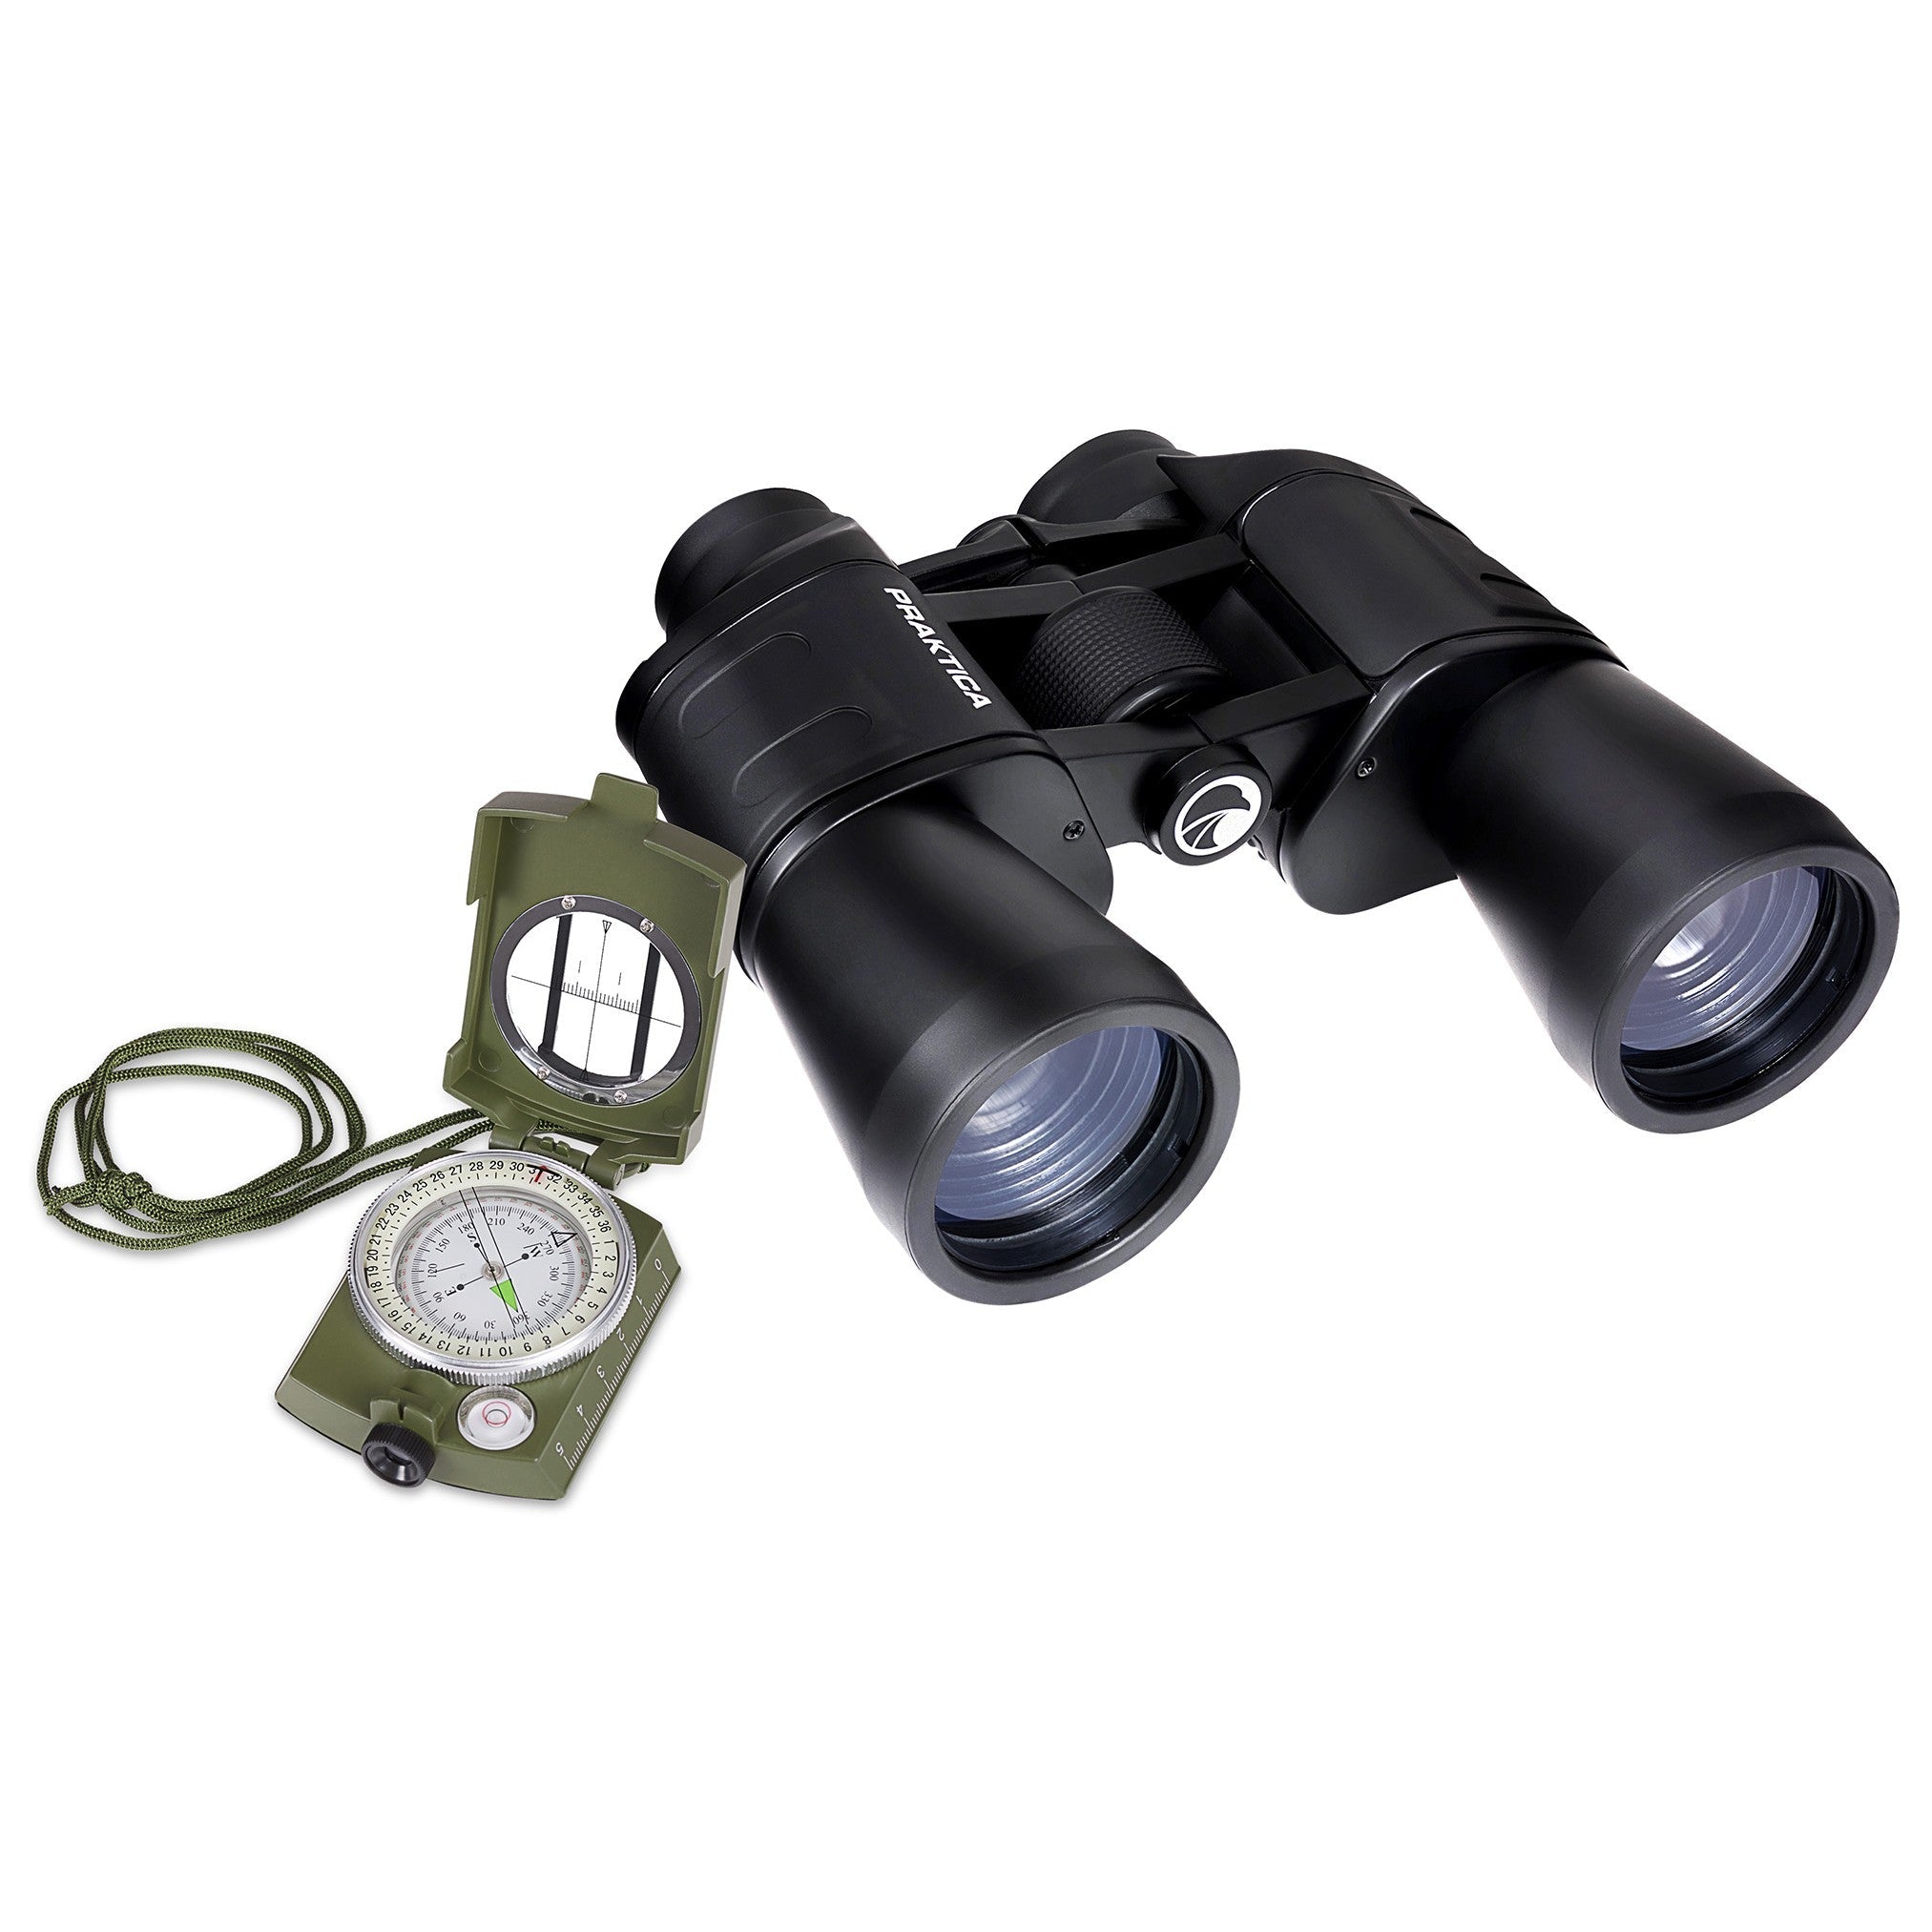 PRAKTICA Falcon 10x50mm Porro Prism Field Binoculars - Black (Binoculars + Compass)